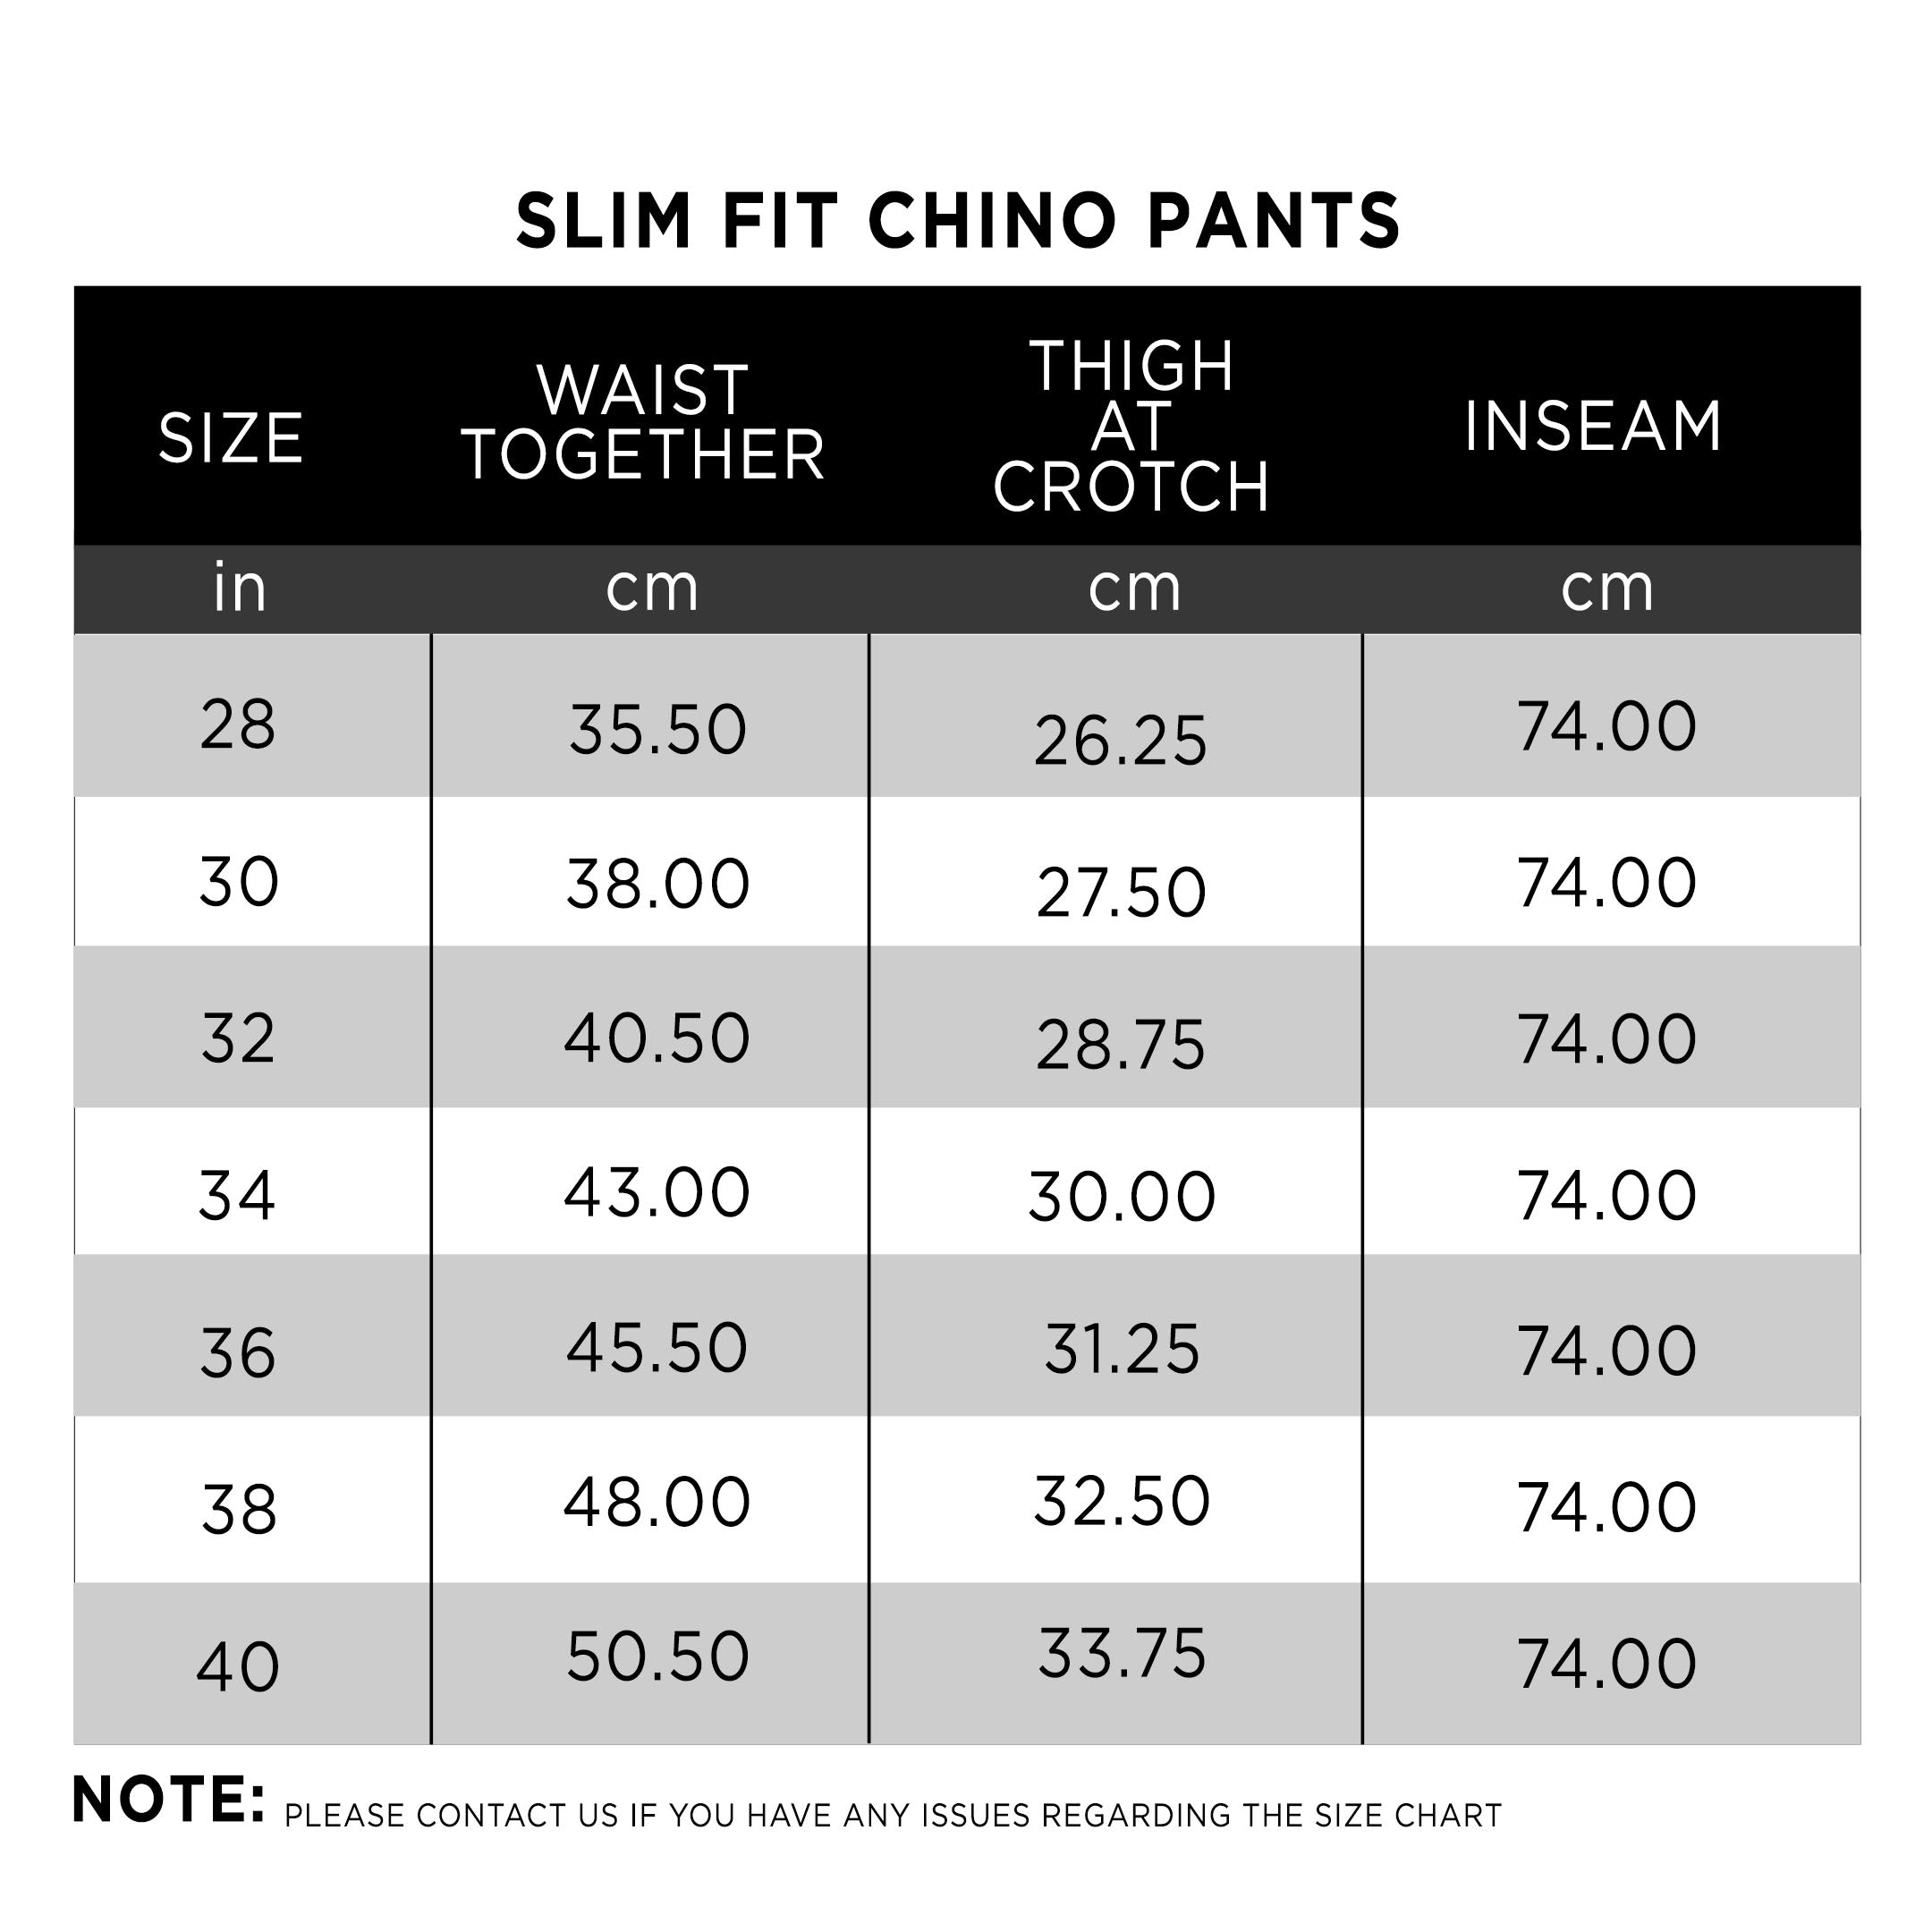 Slim Fit Chino Pants